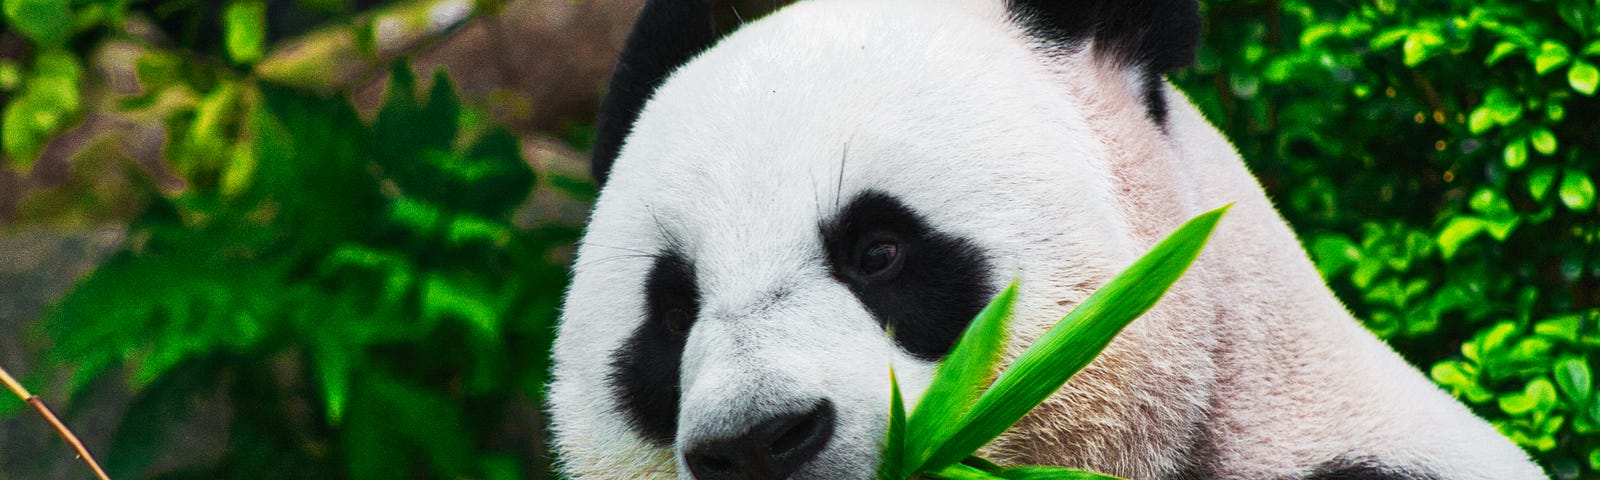 Pandas Save to CSV File